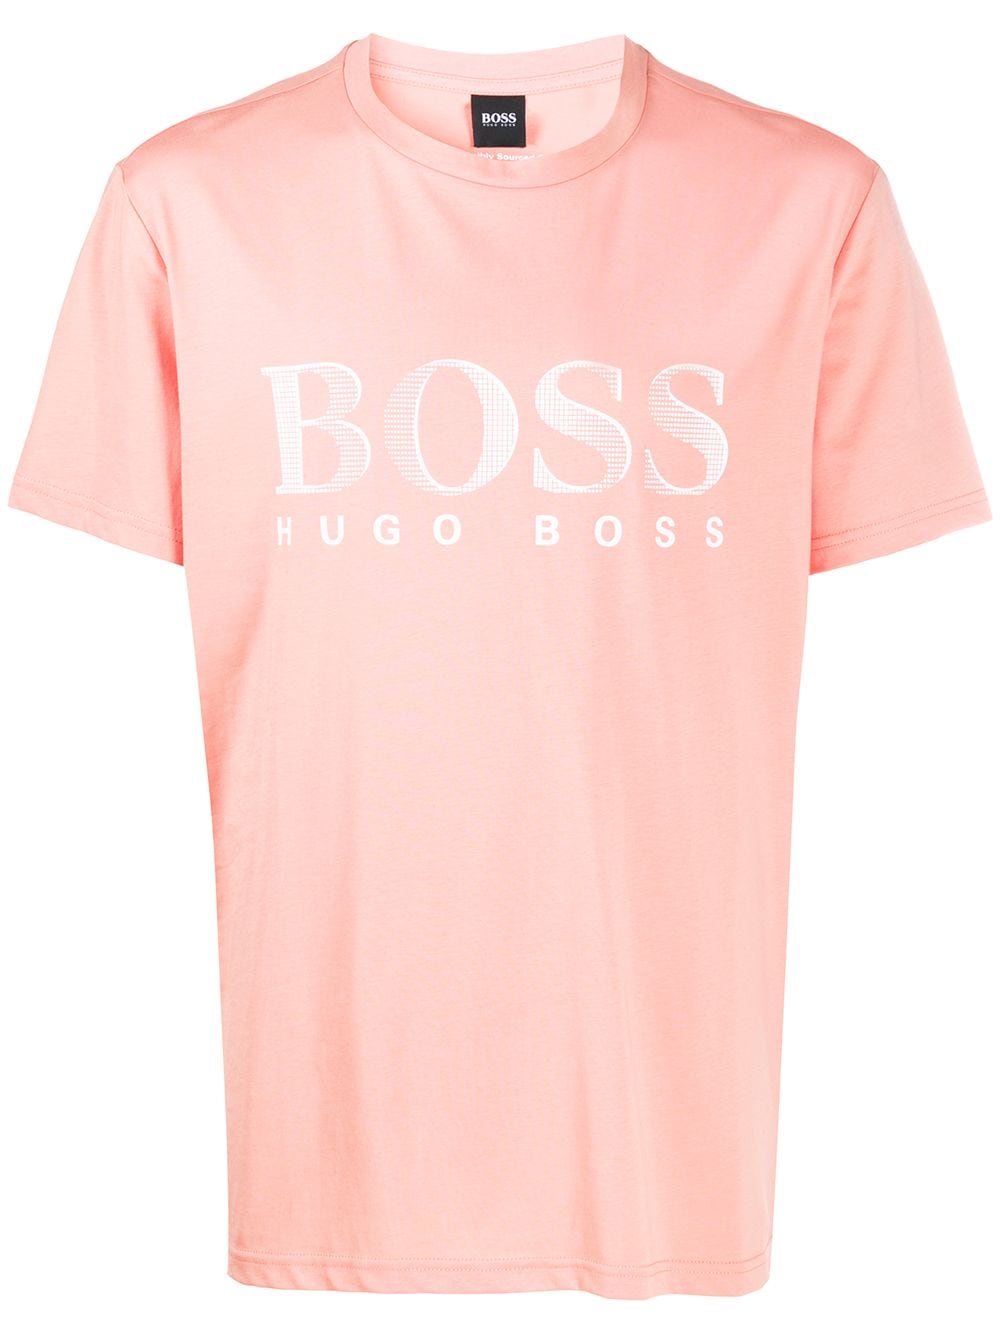 Майка Hugo Boss розовая. Porsche Boss футболка. Hugo Boss розовые. Hugo Boss t Shirt. Hugo розовый